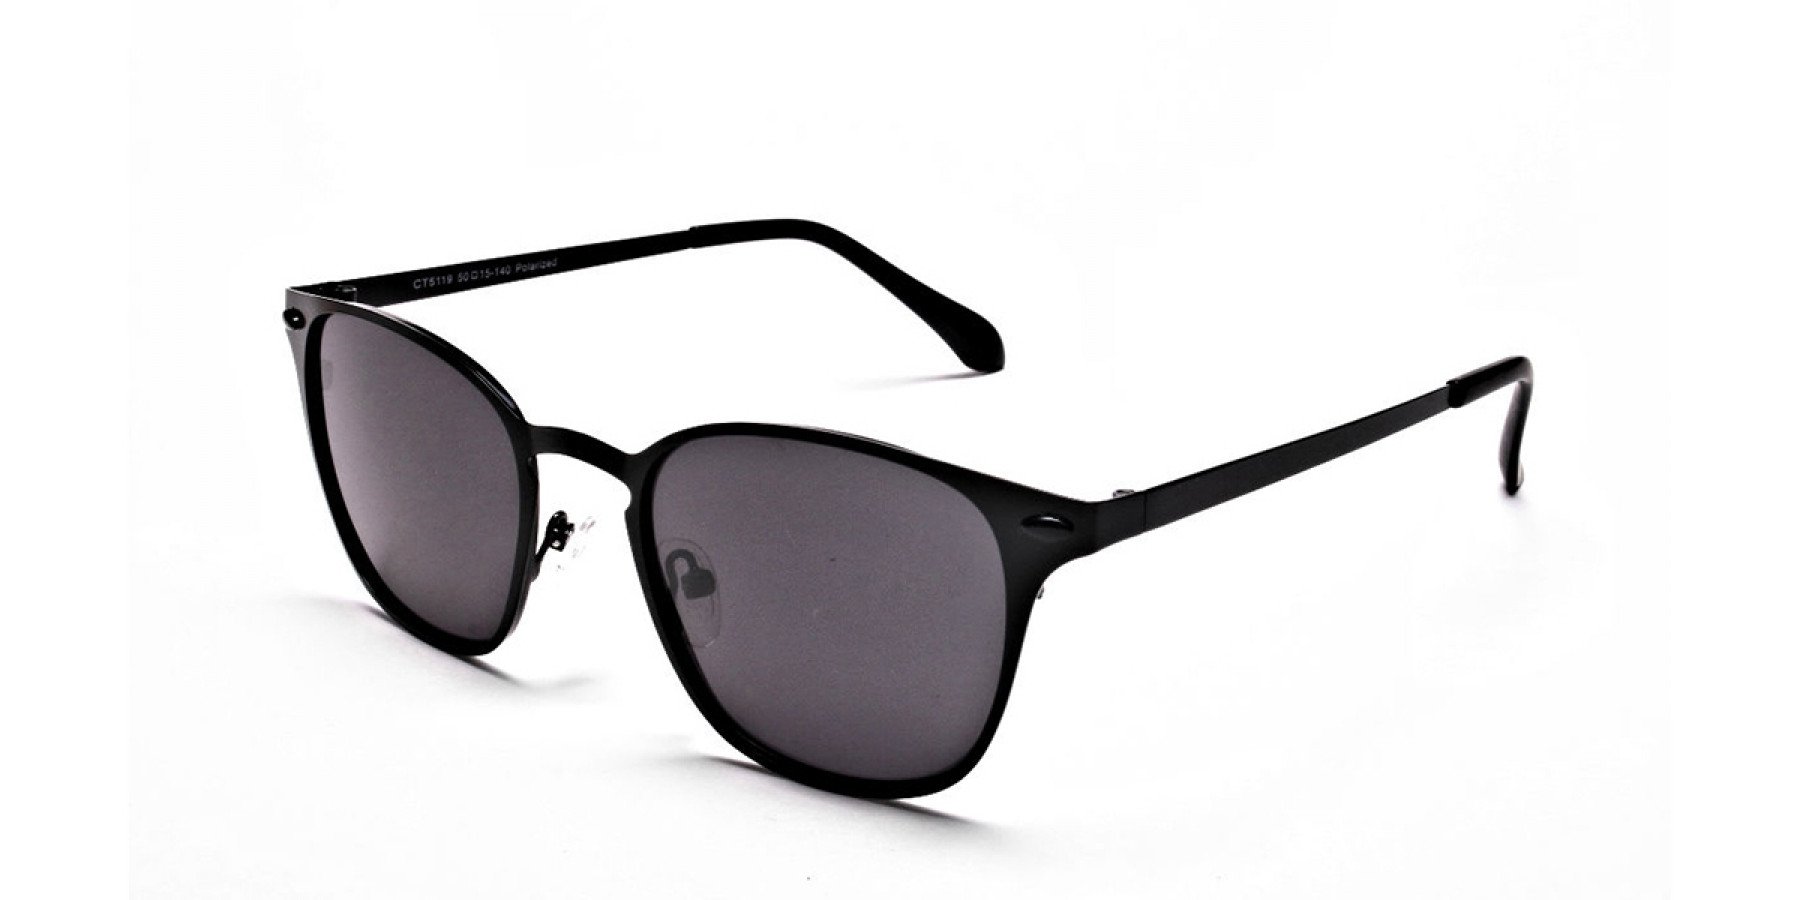 Black Round Sunglasses Online - 2